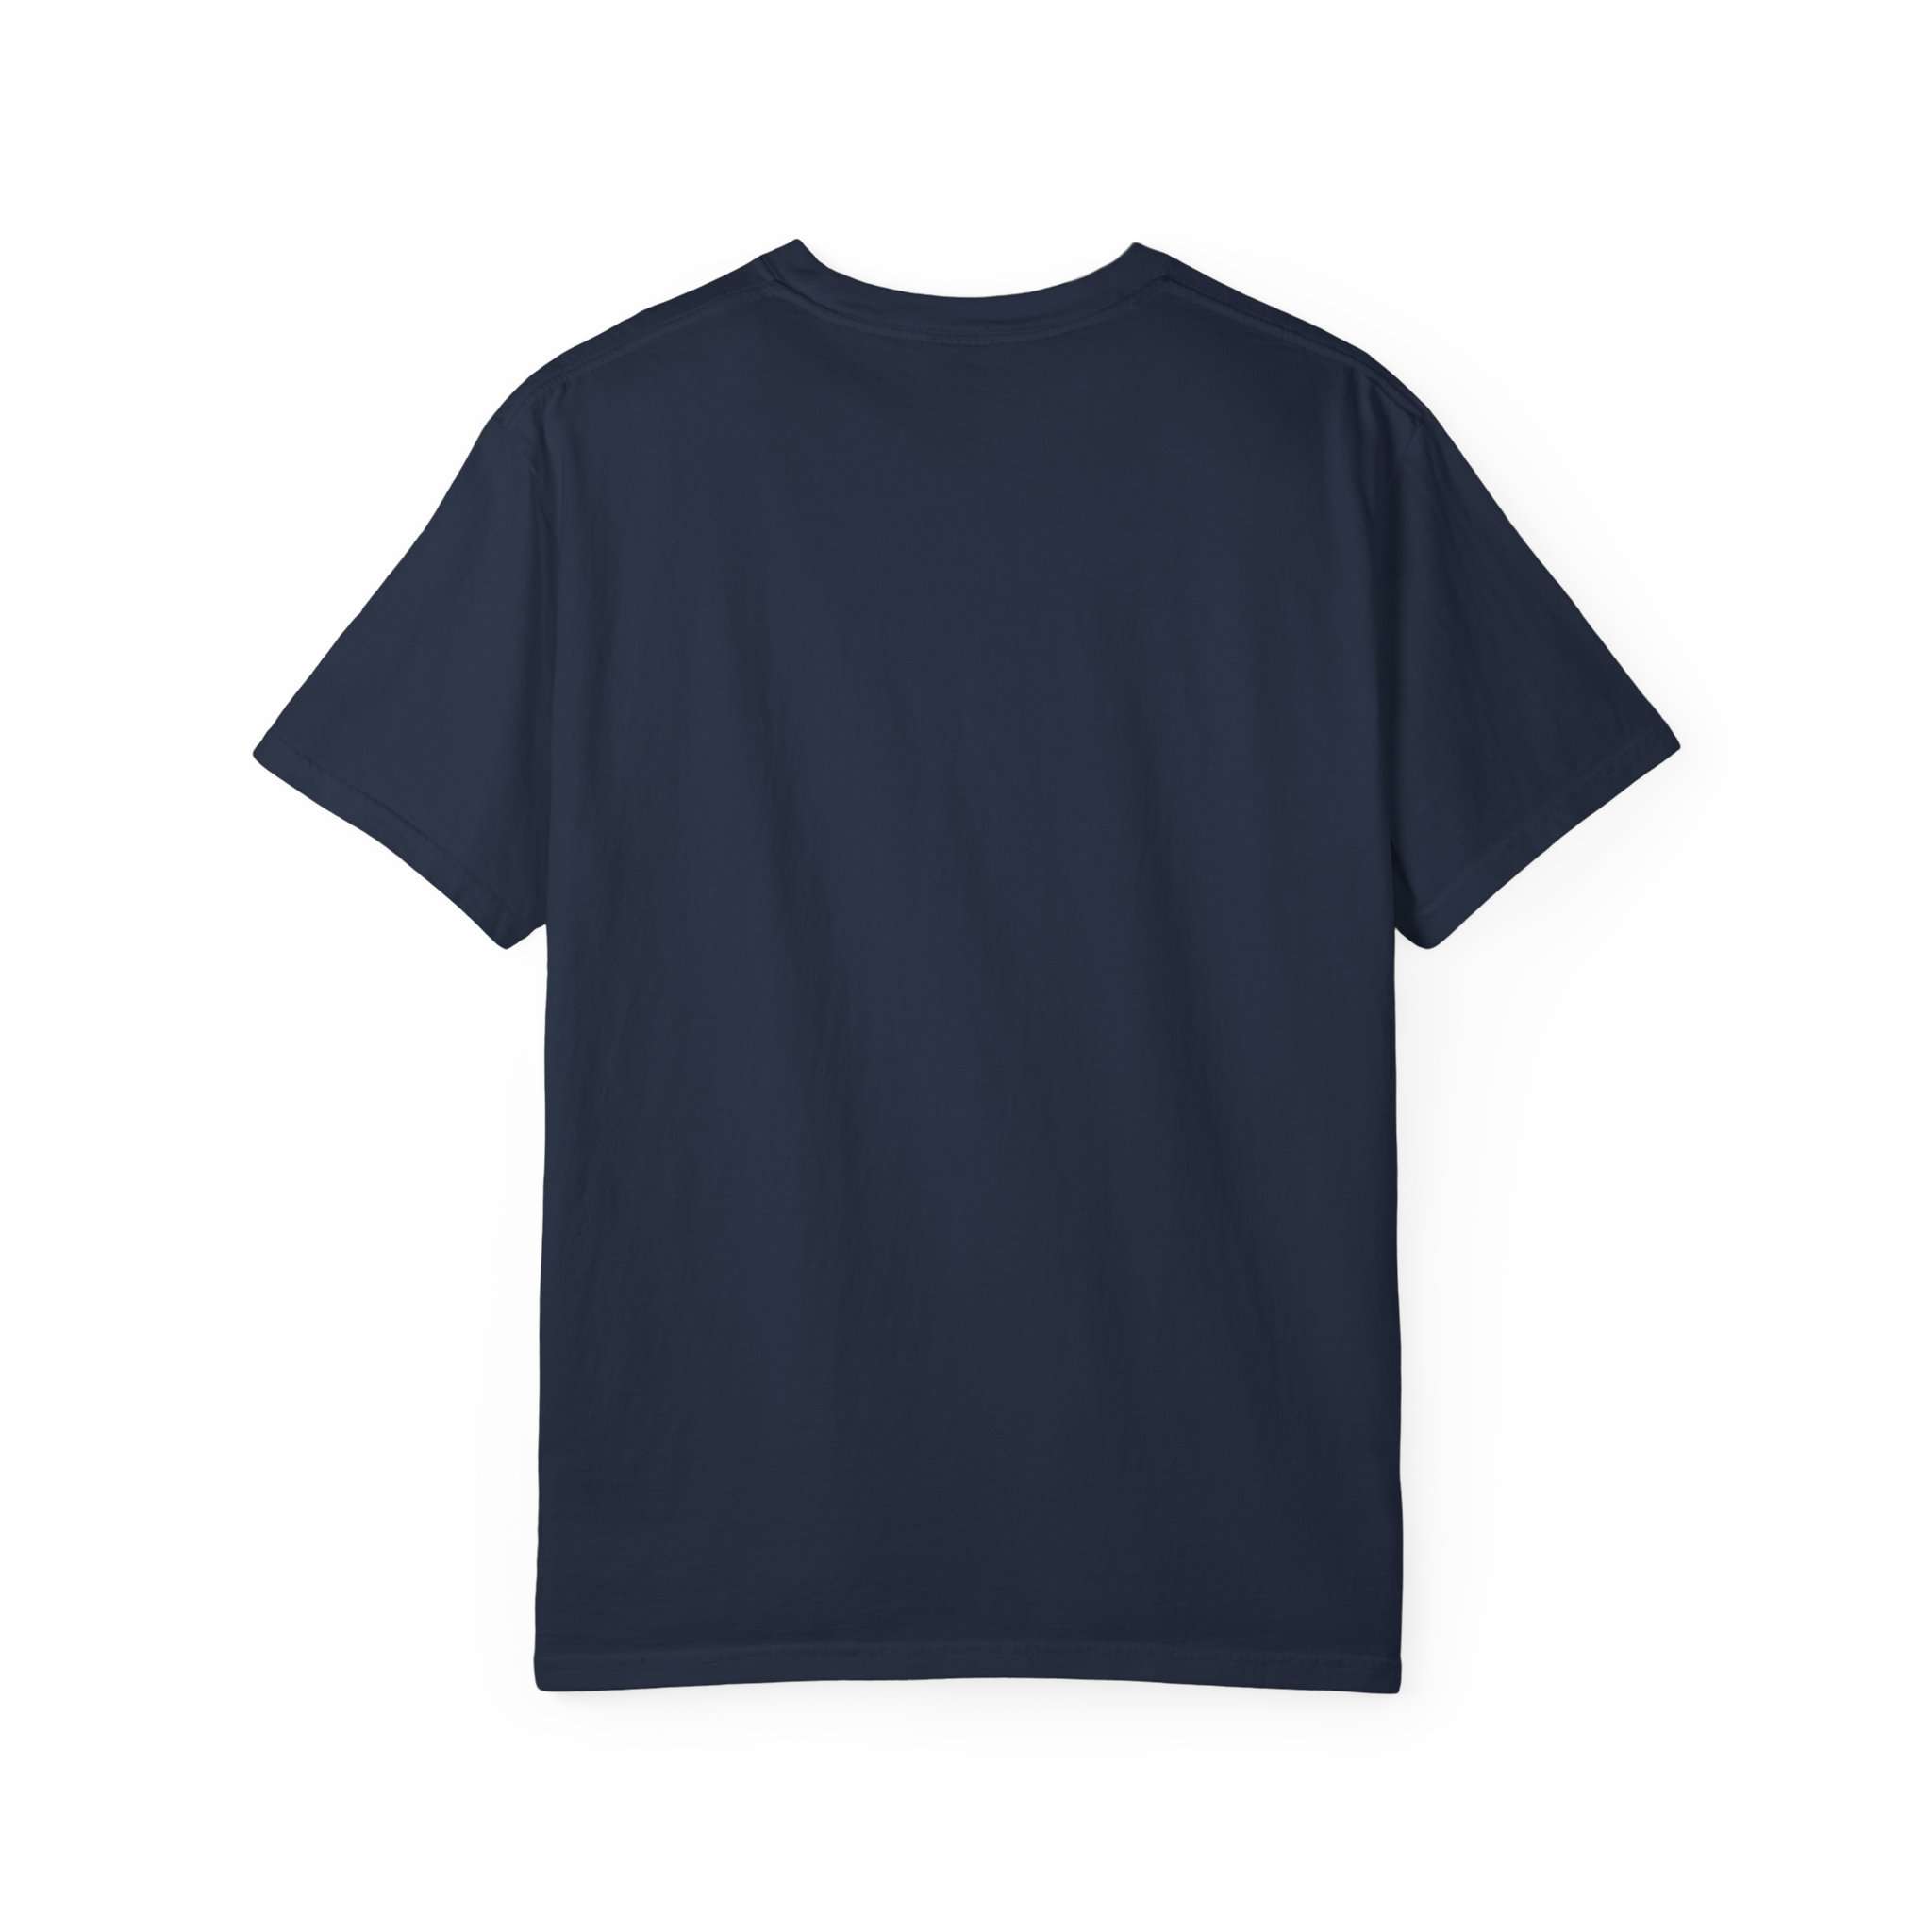 Riko Amanai Design Unisex Garment-Dyed T-shirt